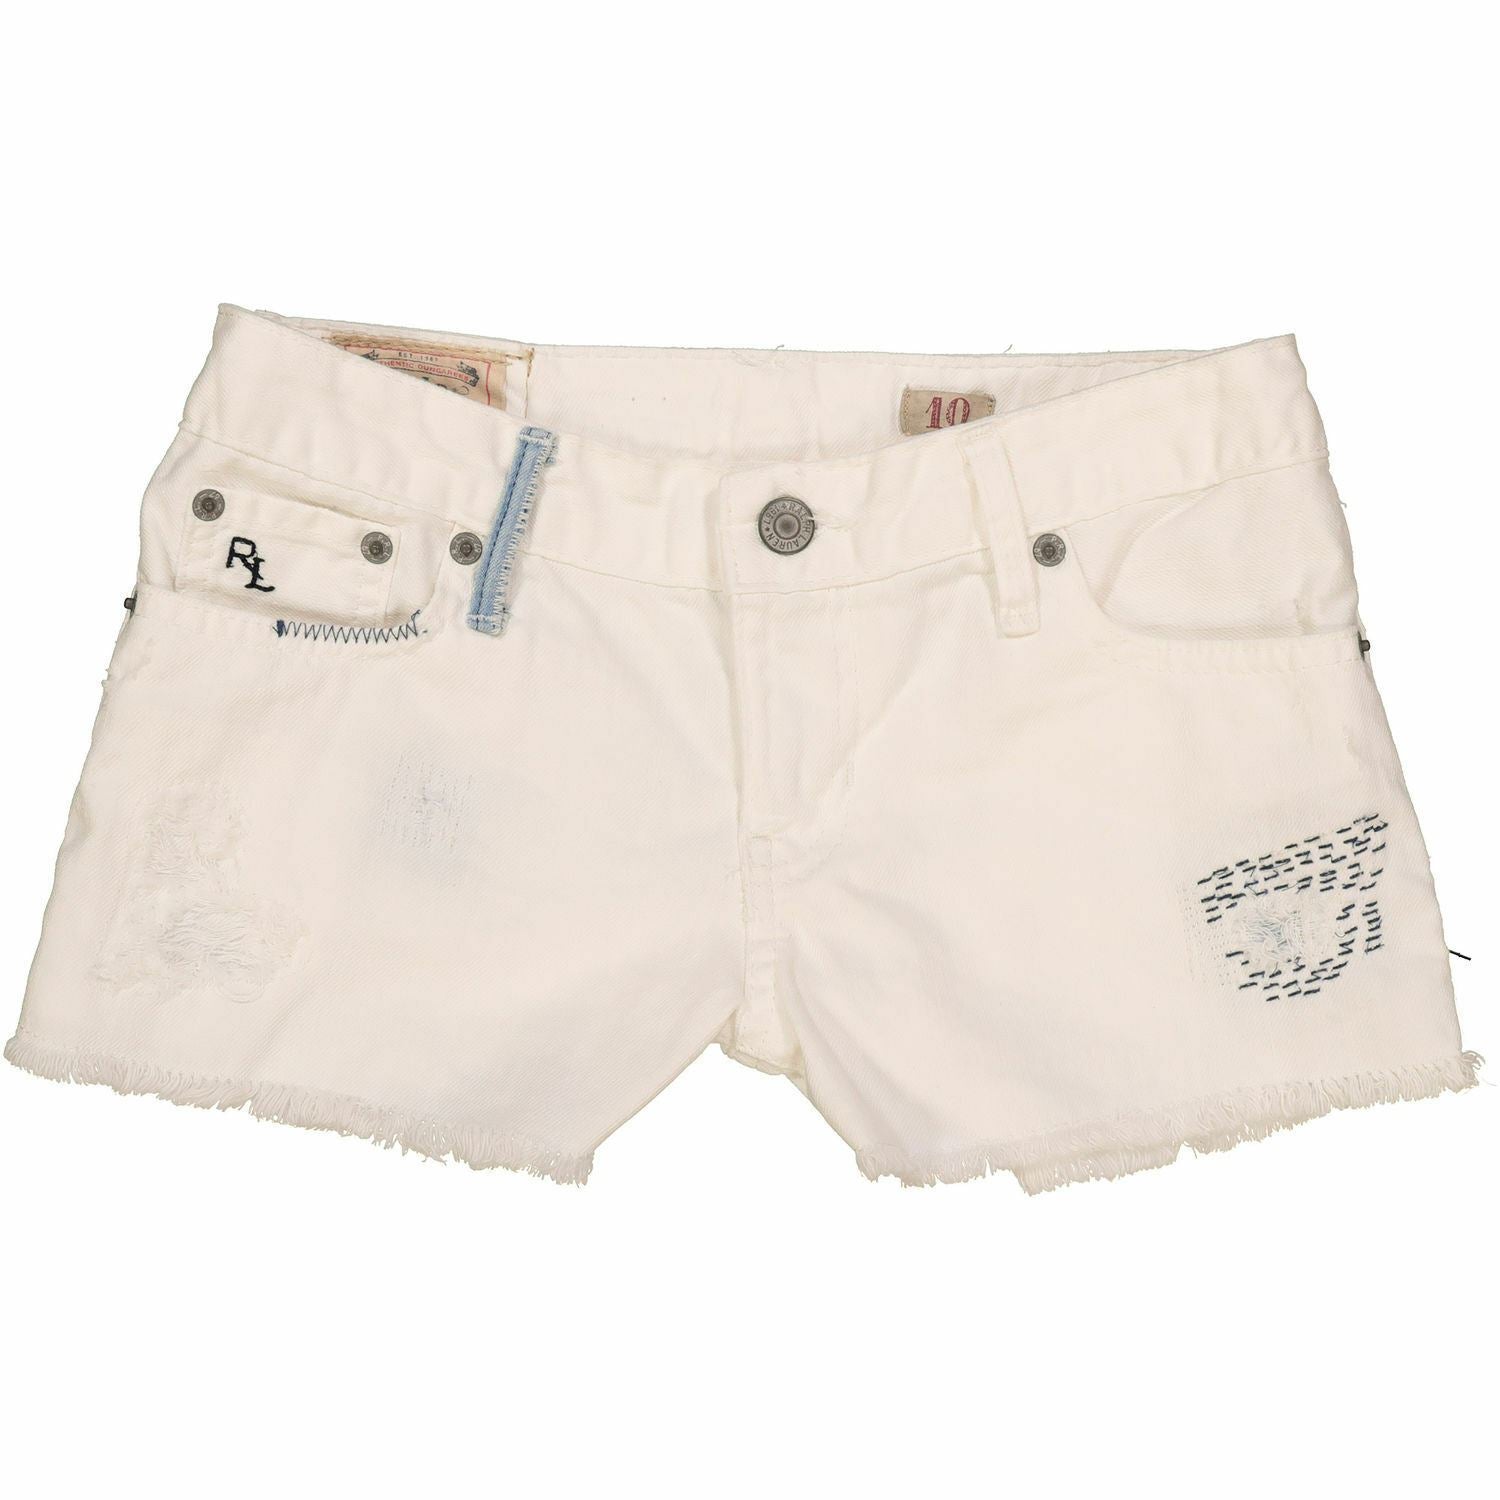 POLO RALPH LAUREN Bethann Kids Girls Washed White Denim Shorts - 8 10 years